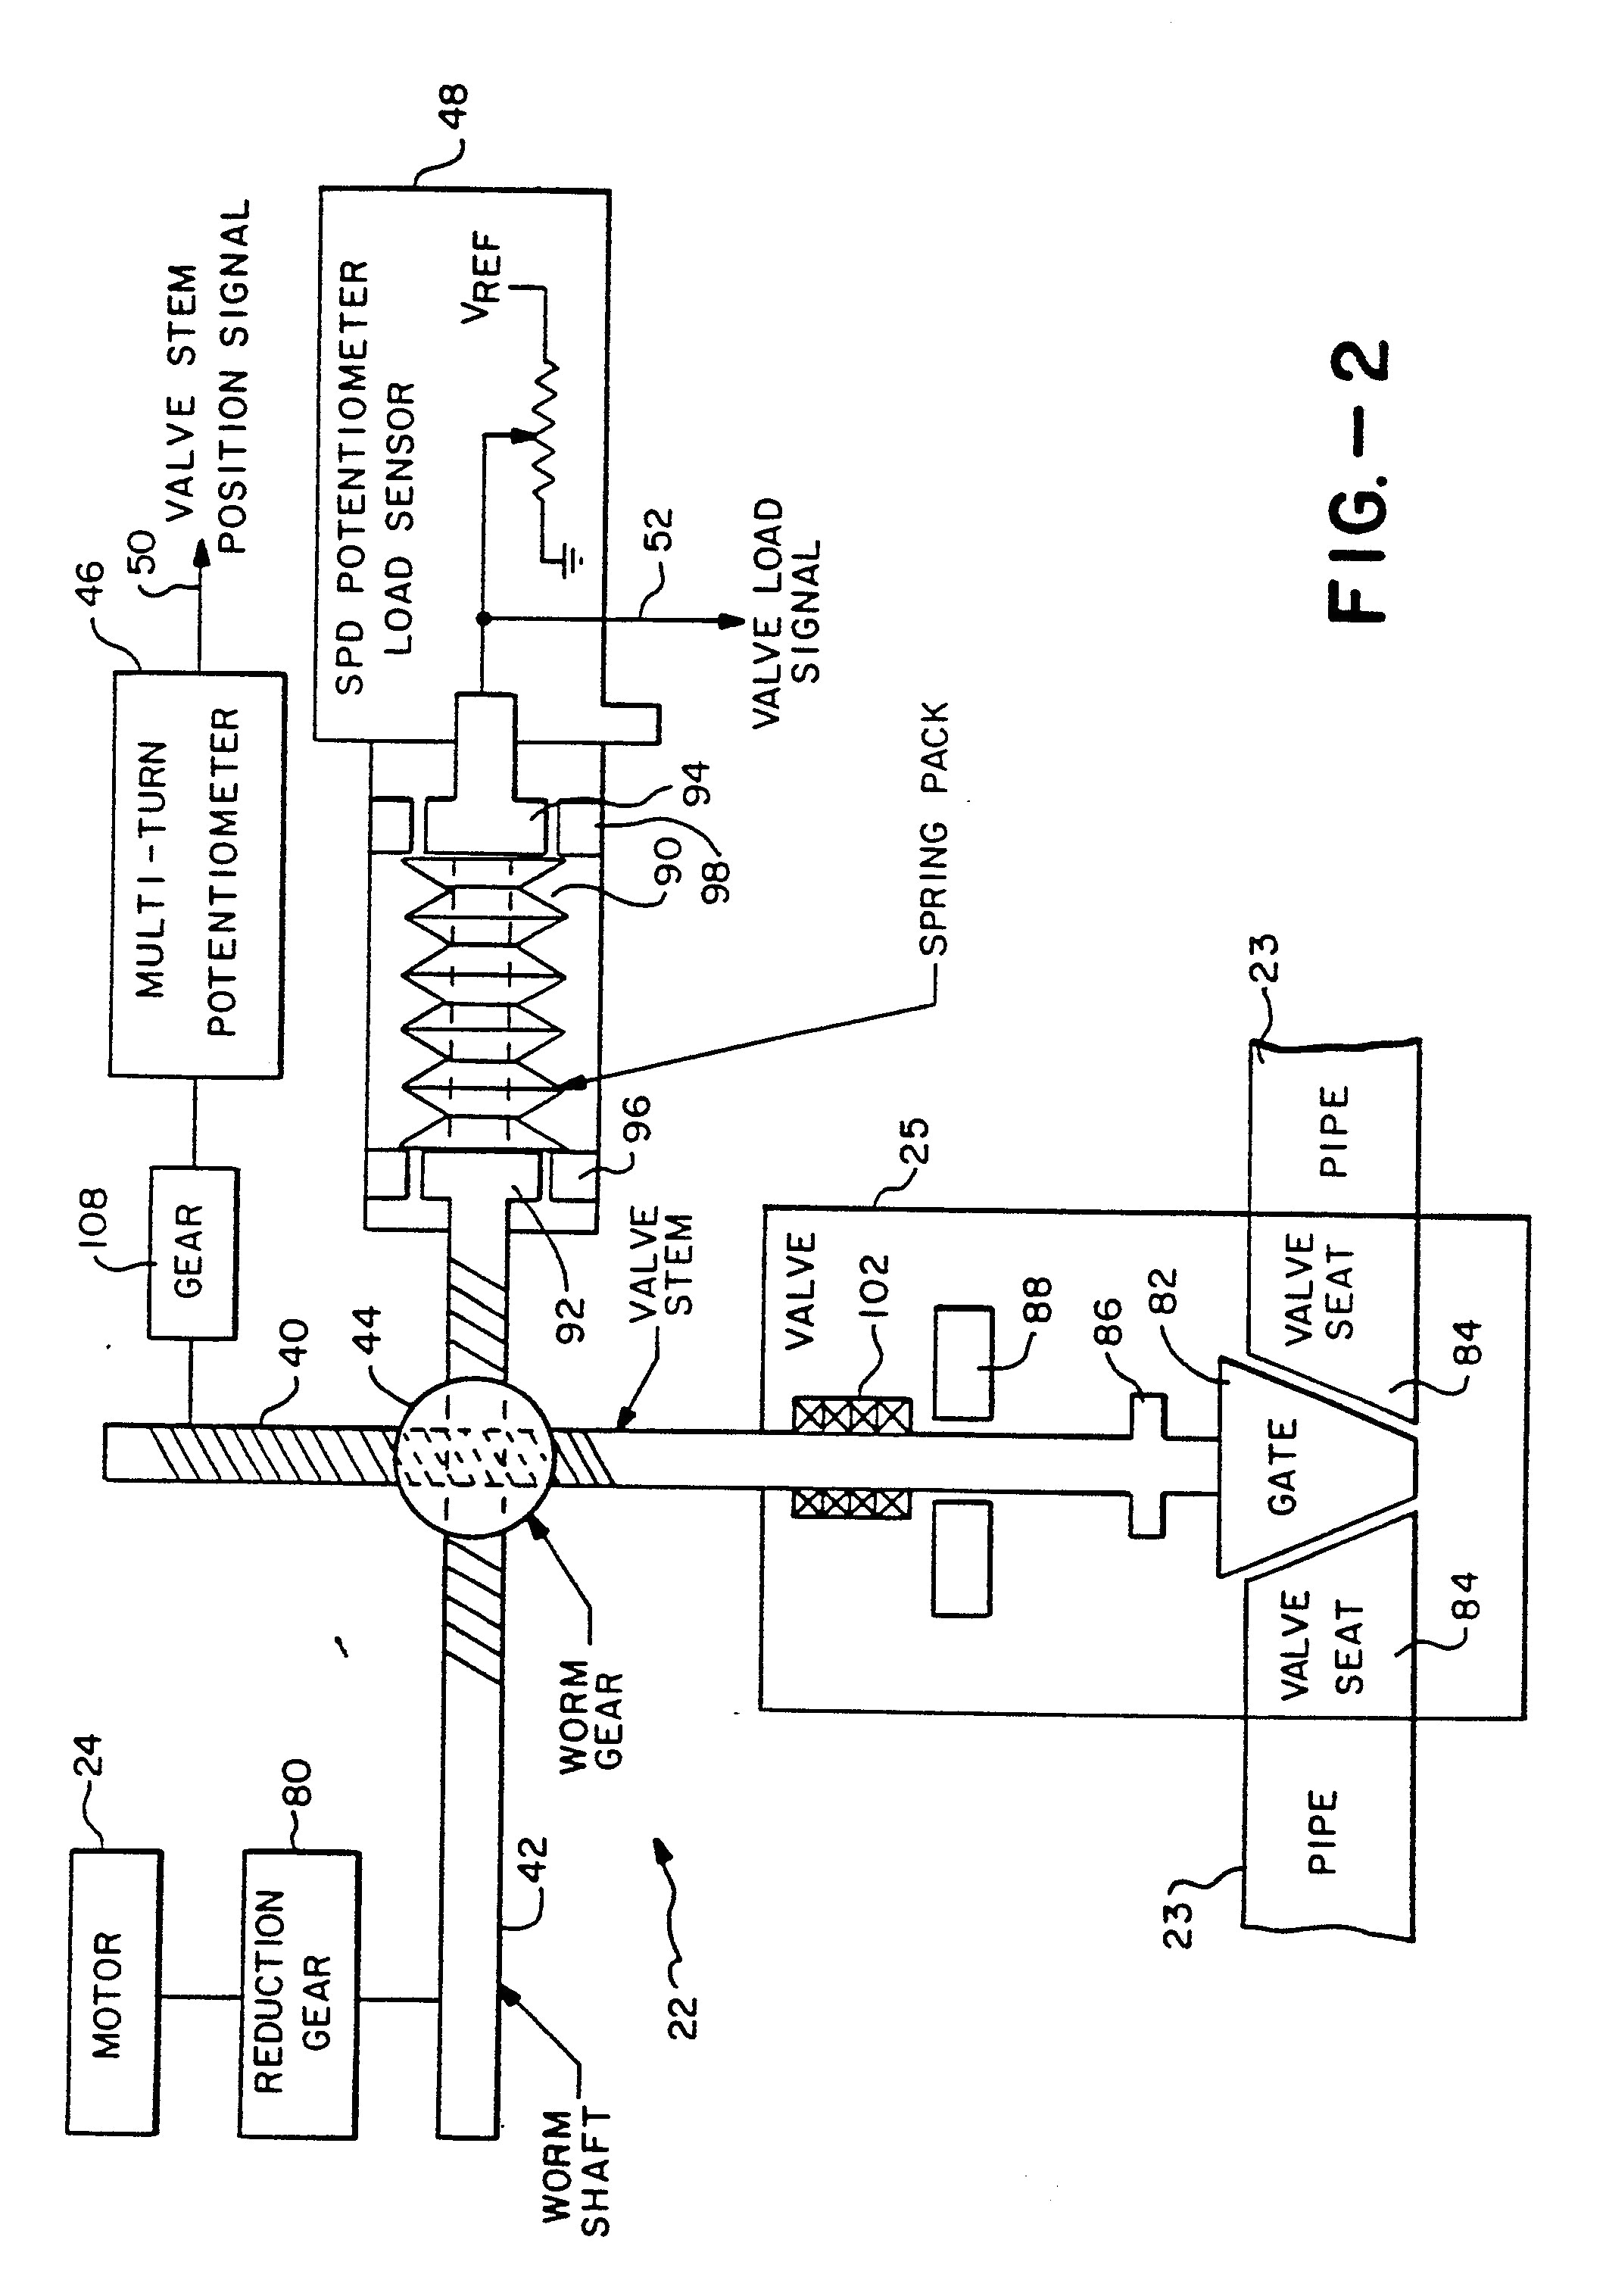 auma actuator wiring diagram for wiring diagram database central locking actuator wiring diagram